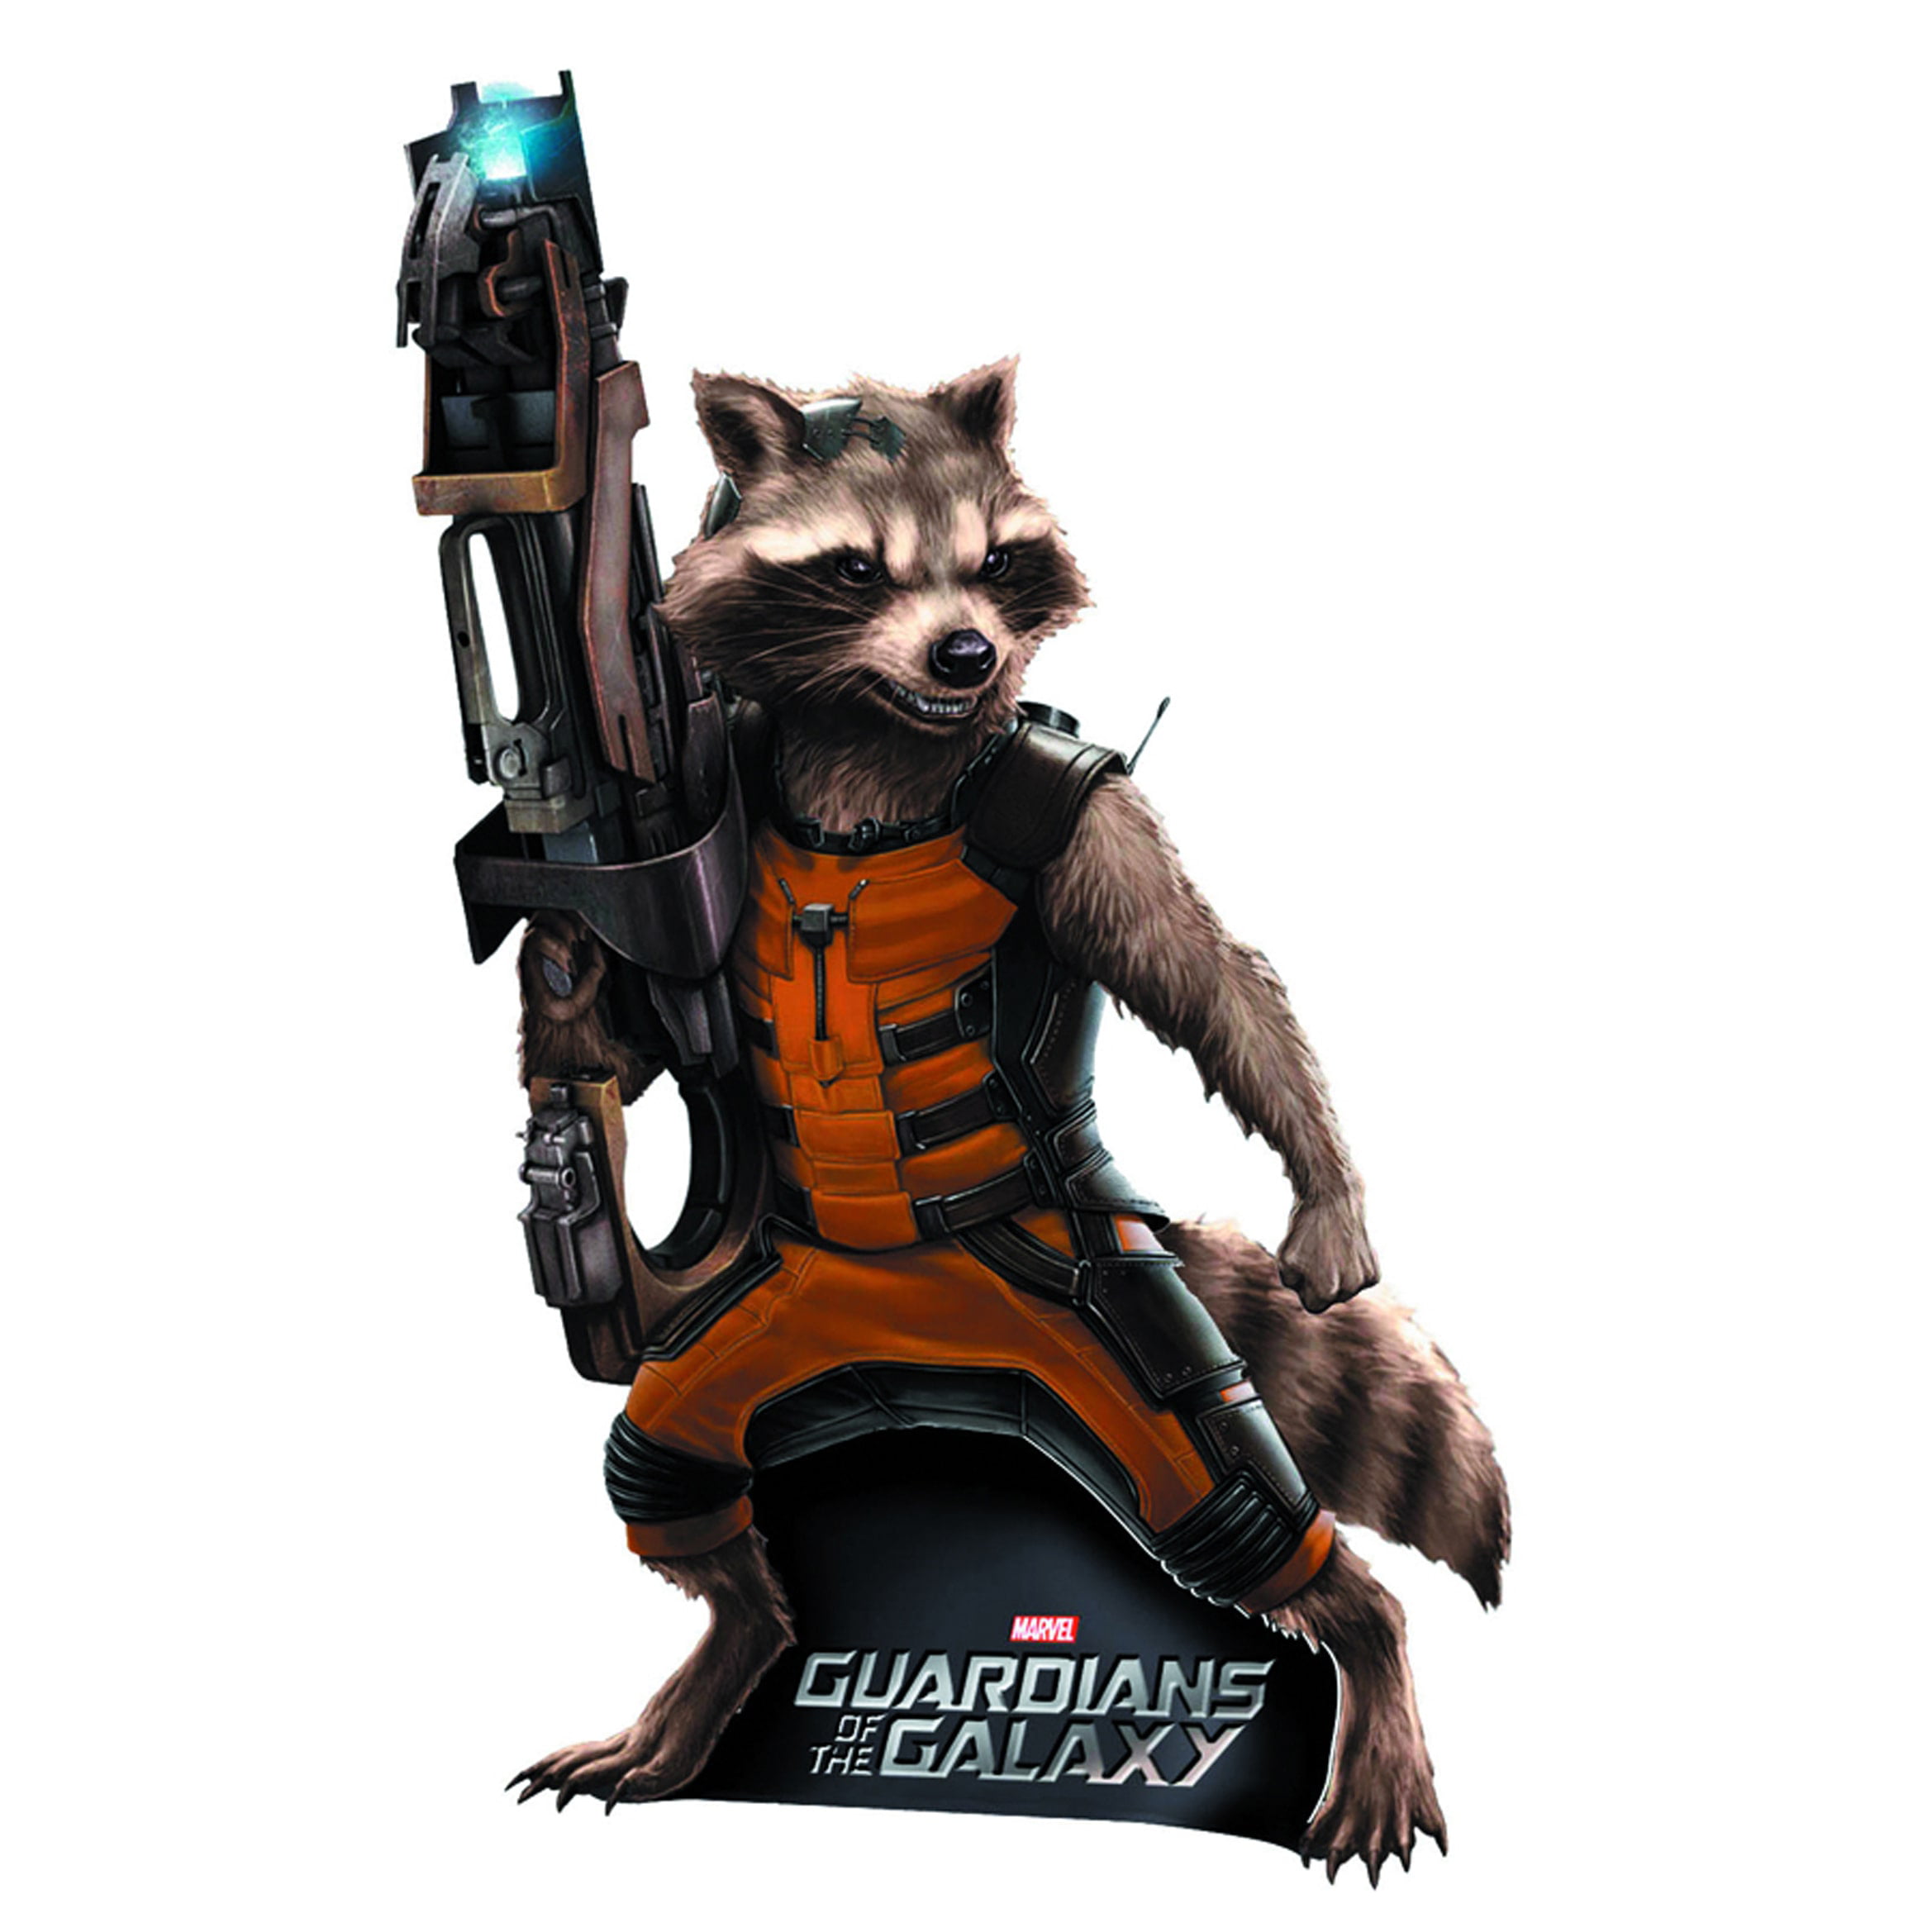 Monogram Guardians Of The Galaxy Rocket Raccoon Figural Bank 